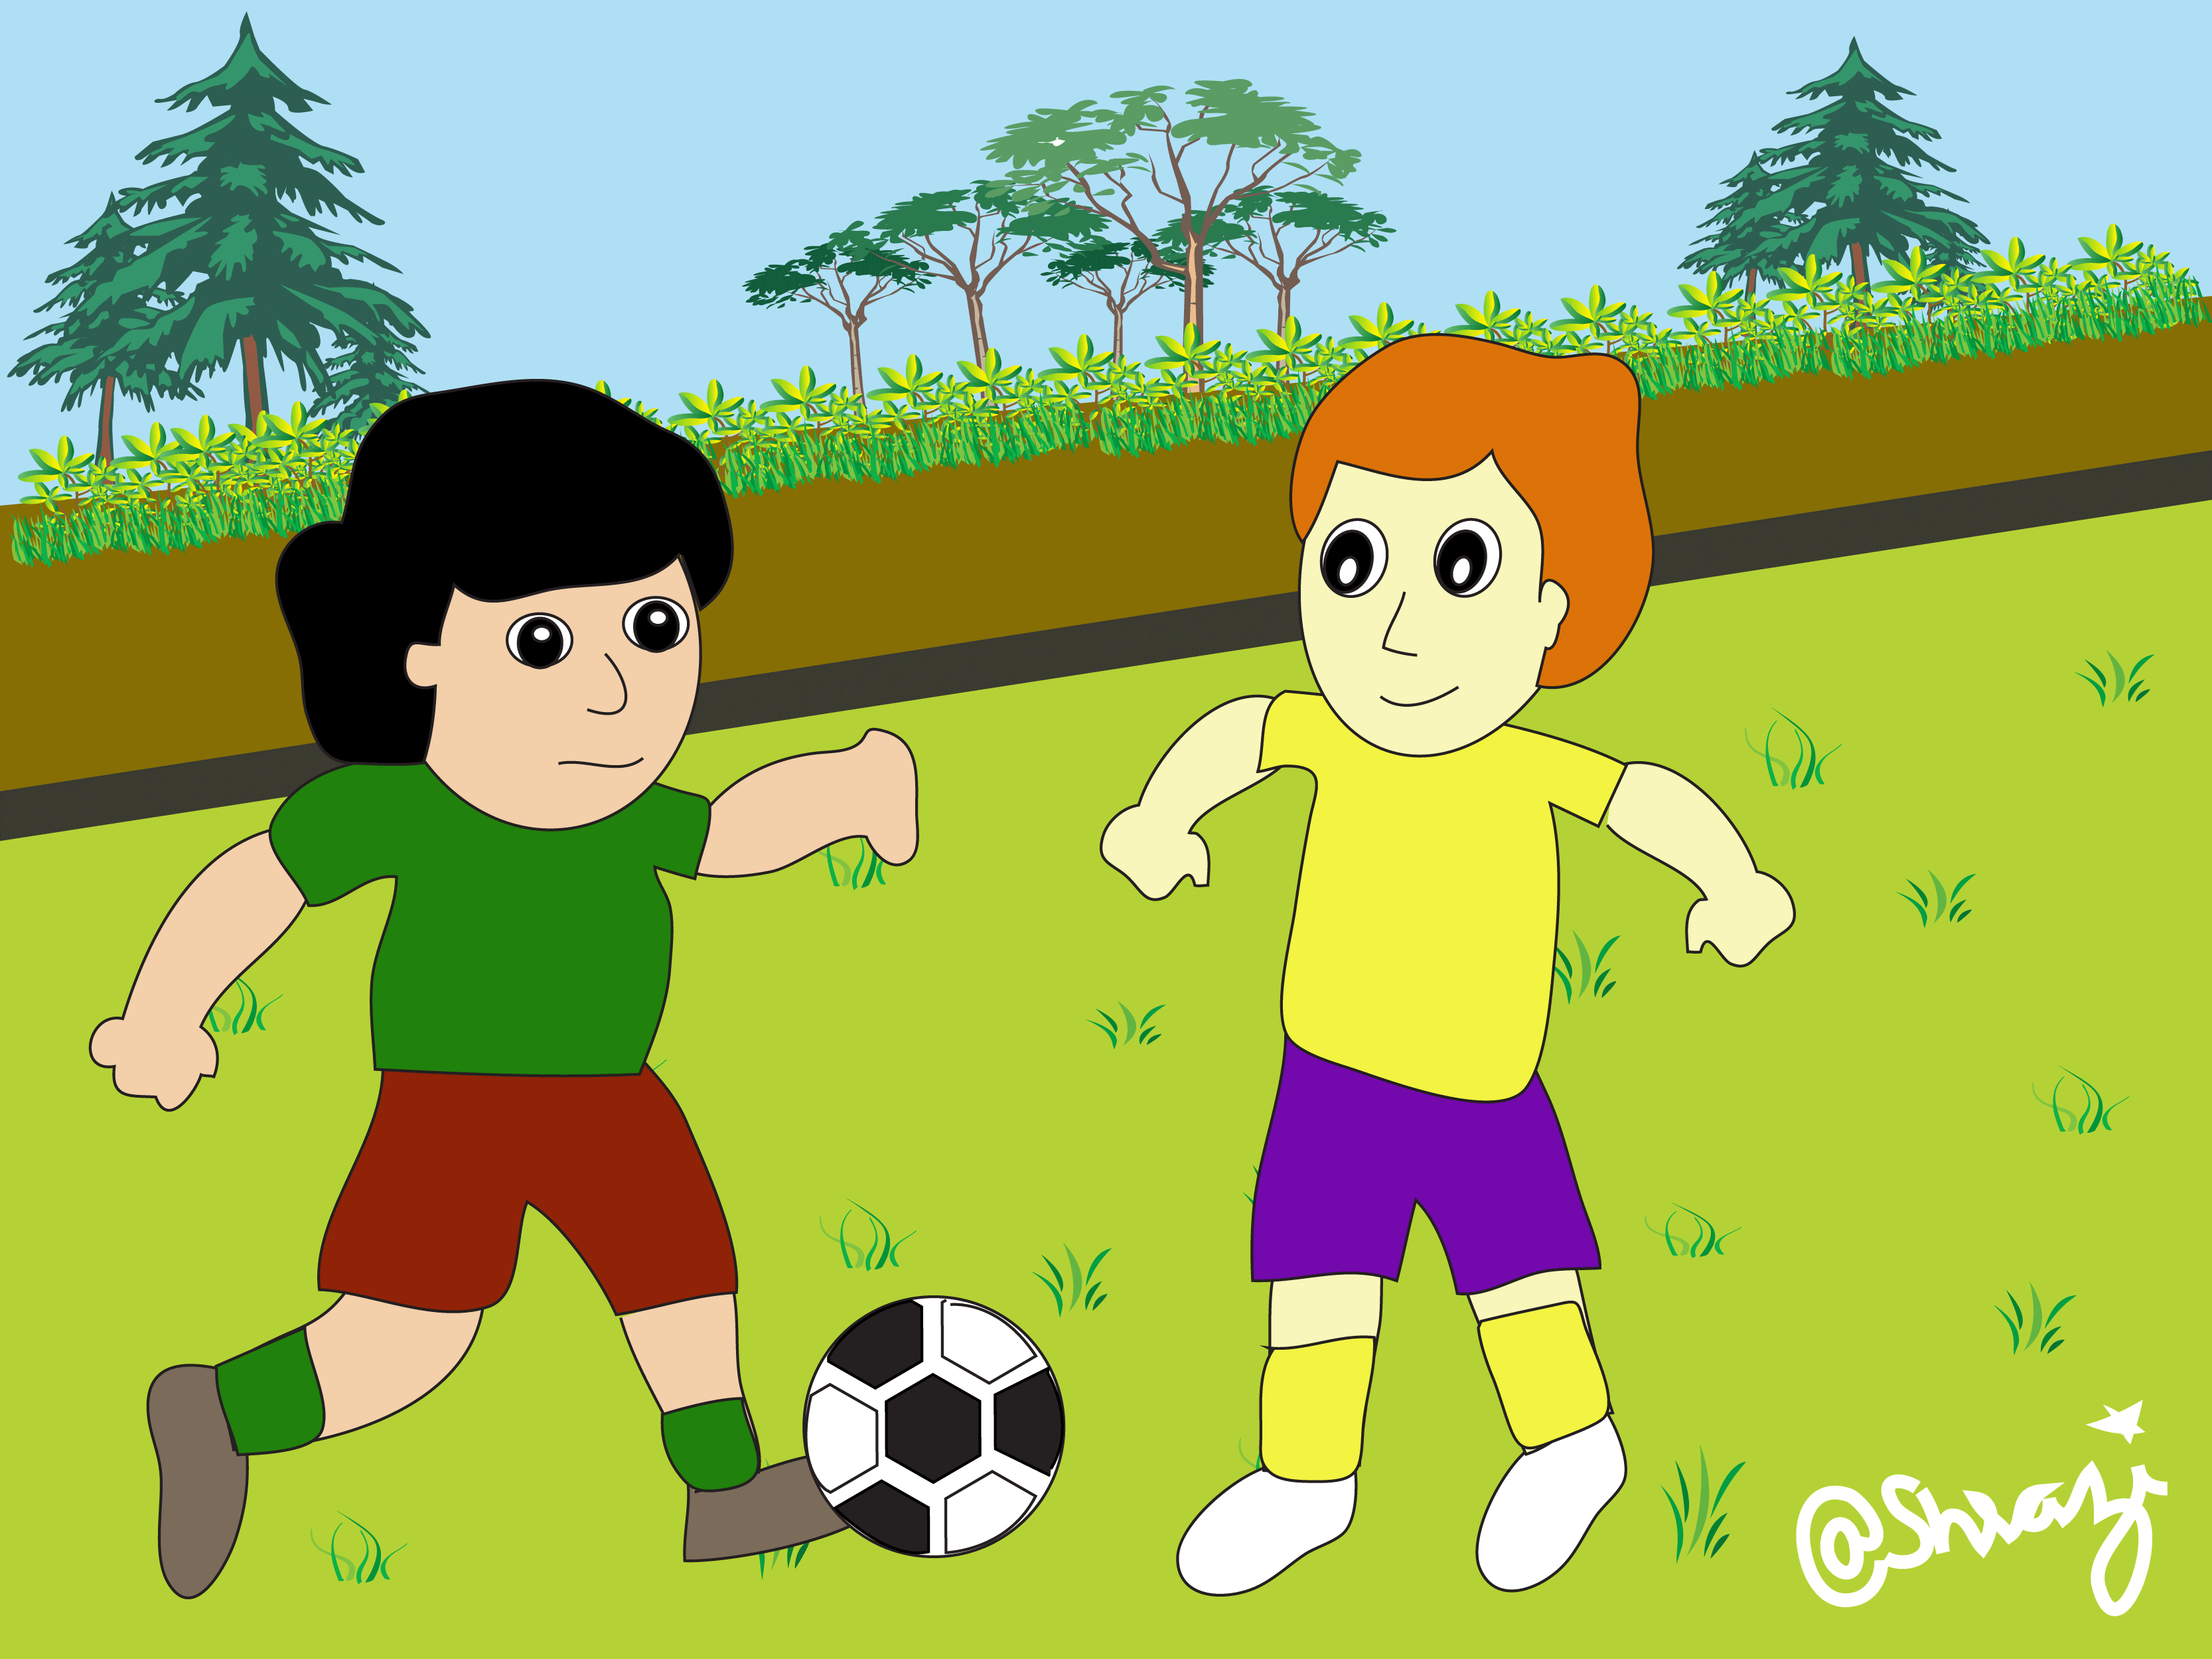 Games can he play. Футбольная анимация. Мультипликация футбол. Анимации для детей футбол. Футболист анимация.